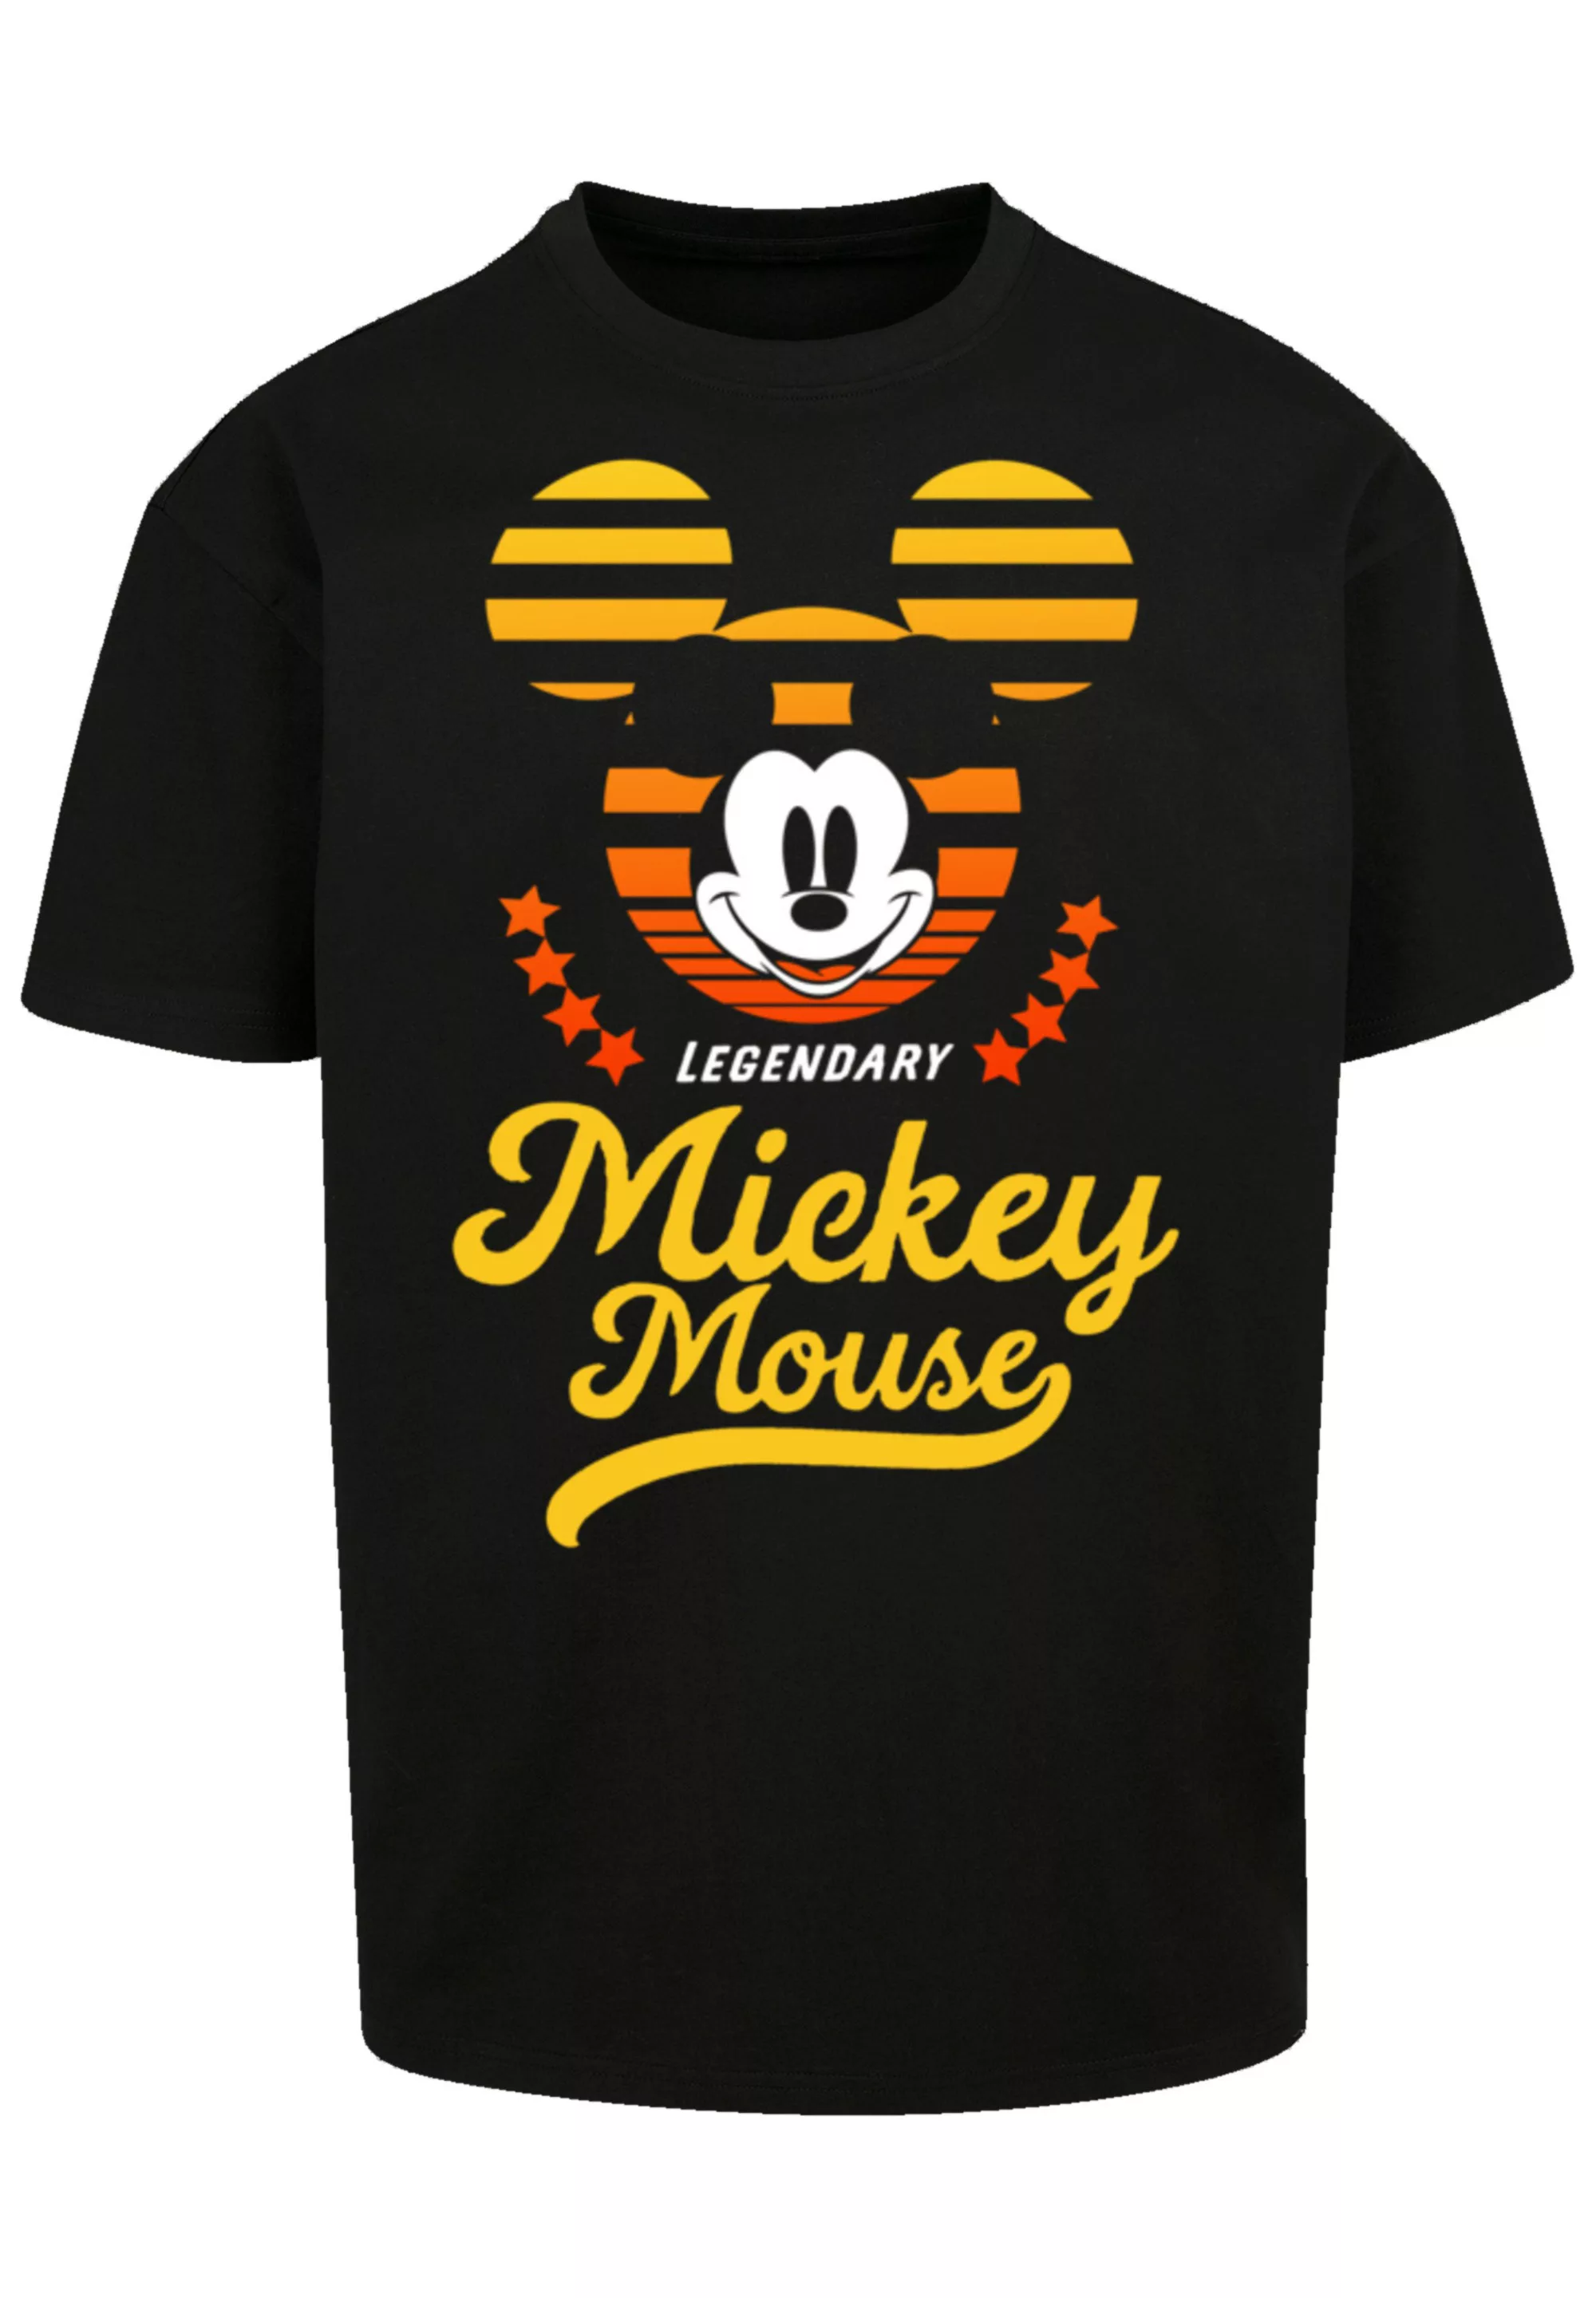 F4NT4STIC T-Shirt "Disney Mickey Mouse California", Premium Qualität günstig online kaufen